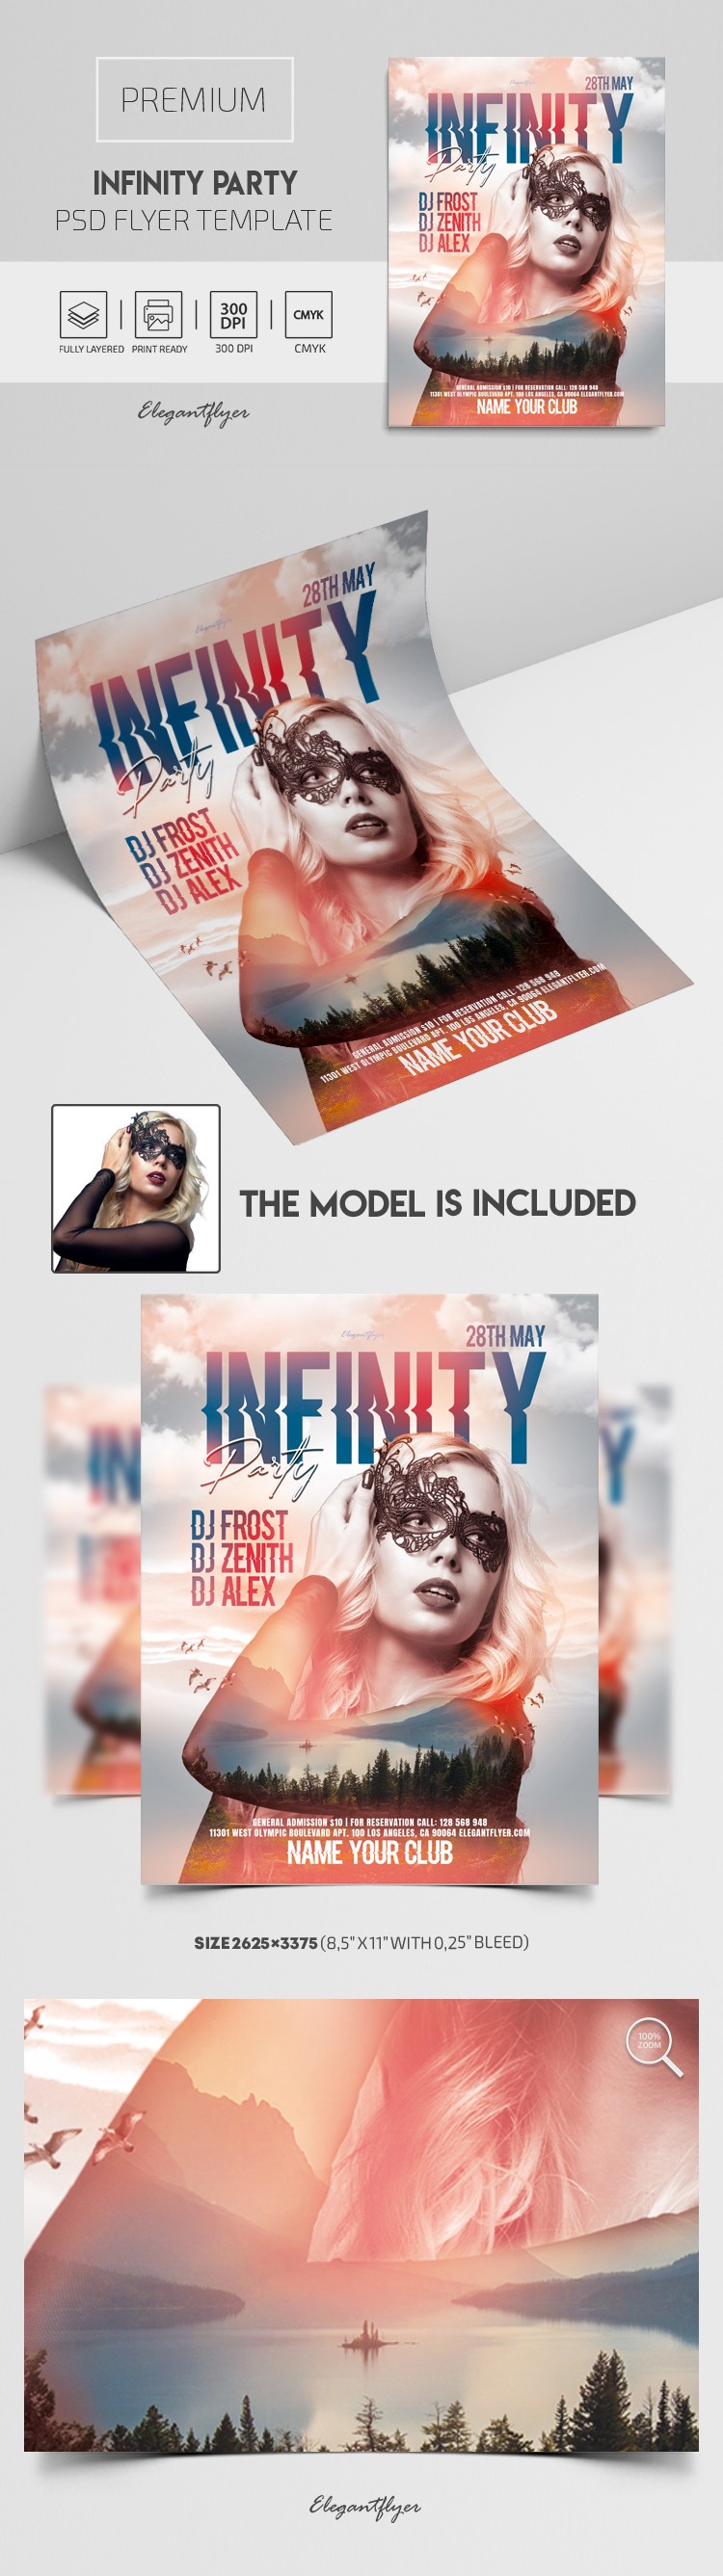 Infinity Party Flyer by ElegantFlyer